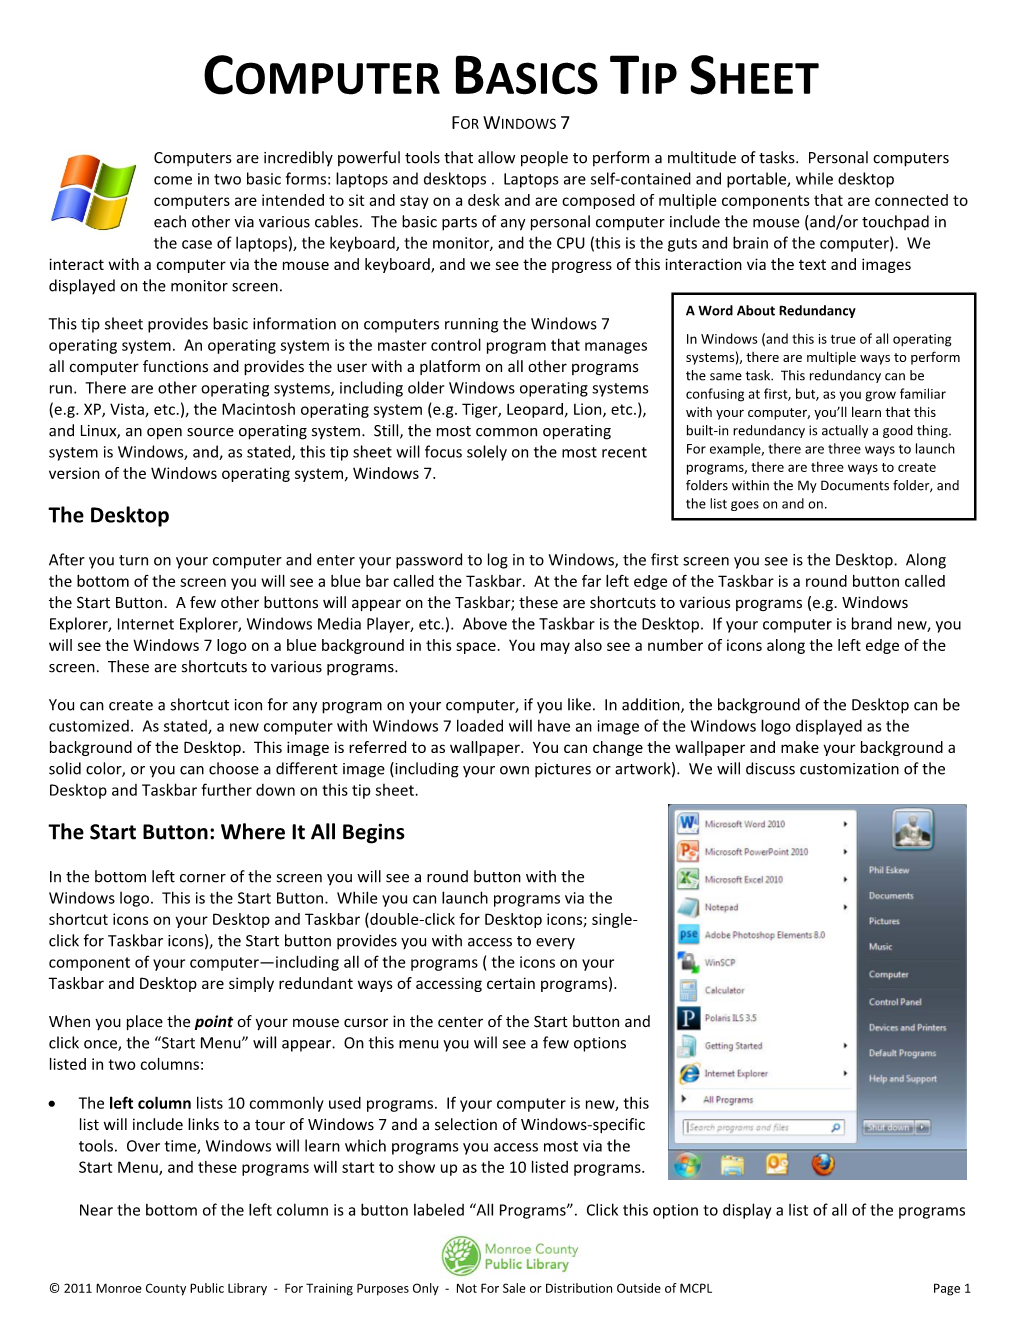 Computer Basics Tip Sheet for Windows 7